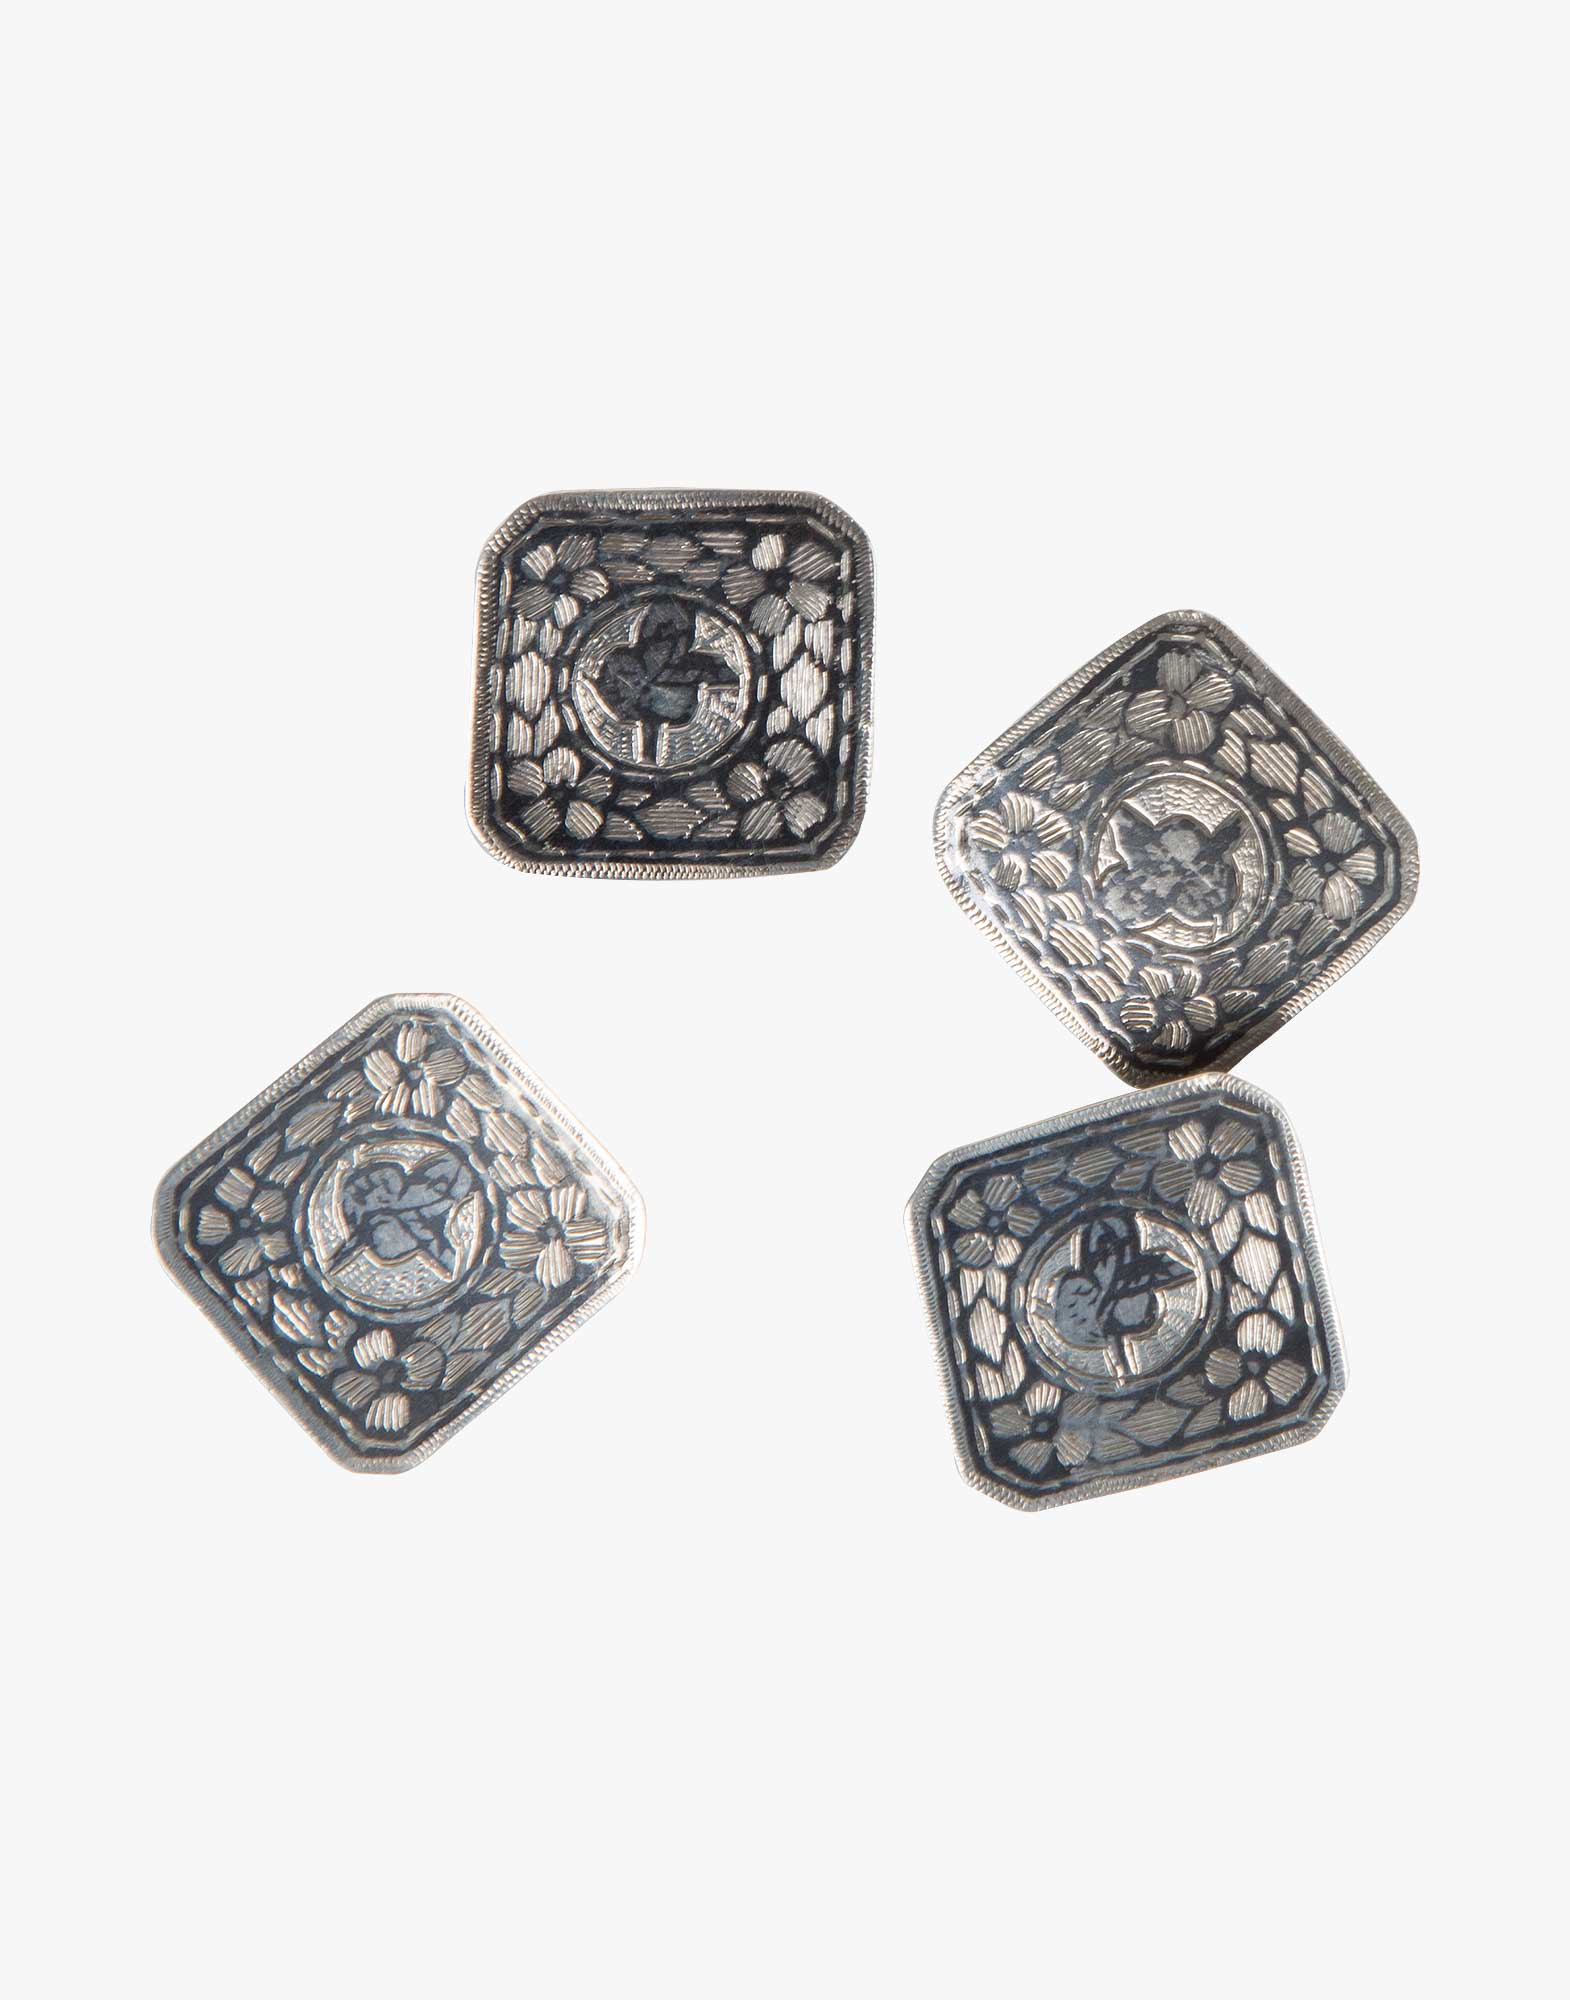 Antique Ottoman Silver Buttons